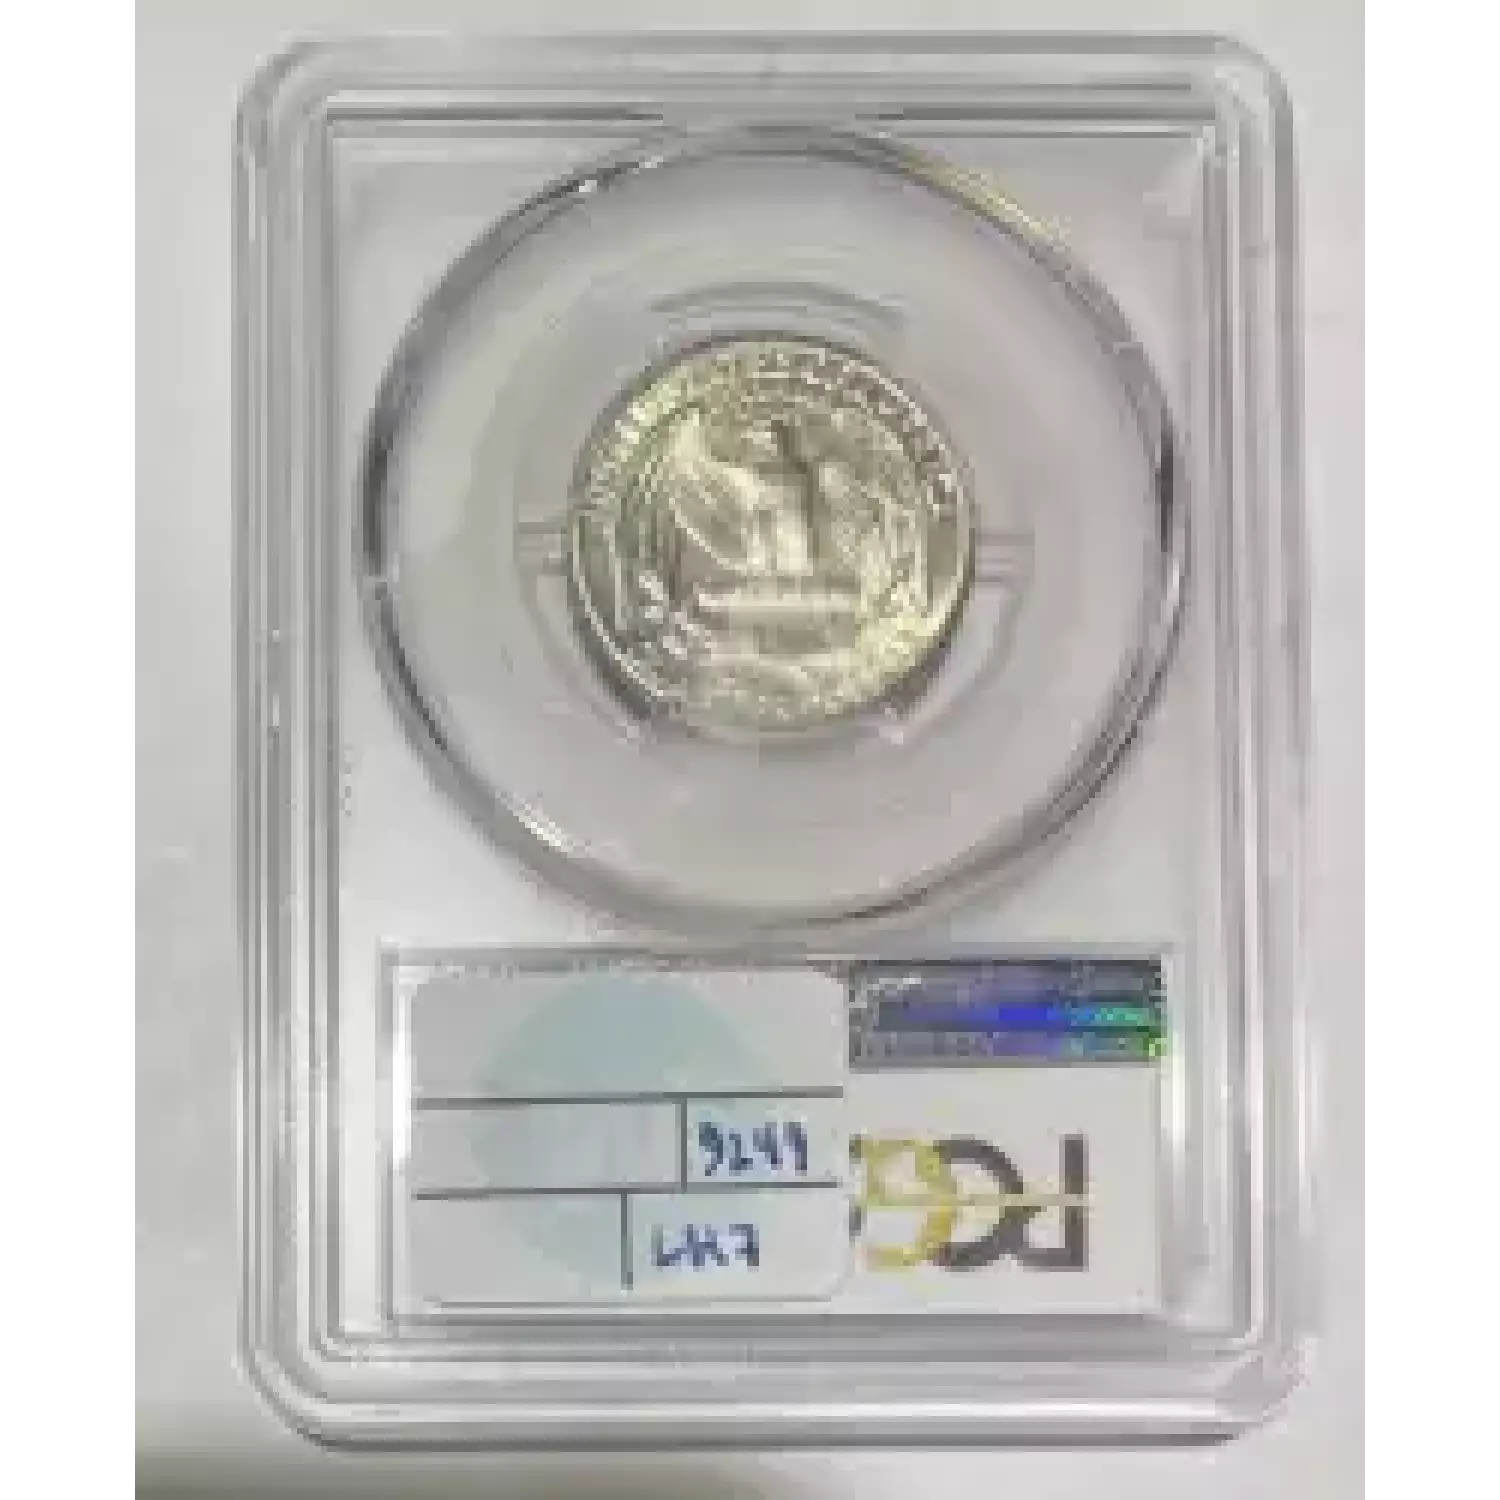 Quarter Dollars - Washington-Silver Coinage (2)